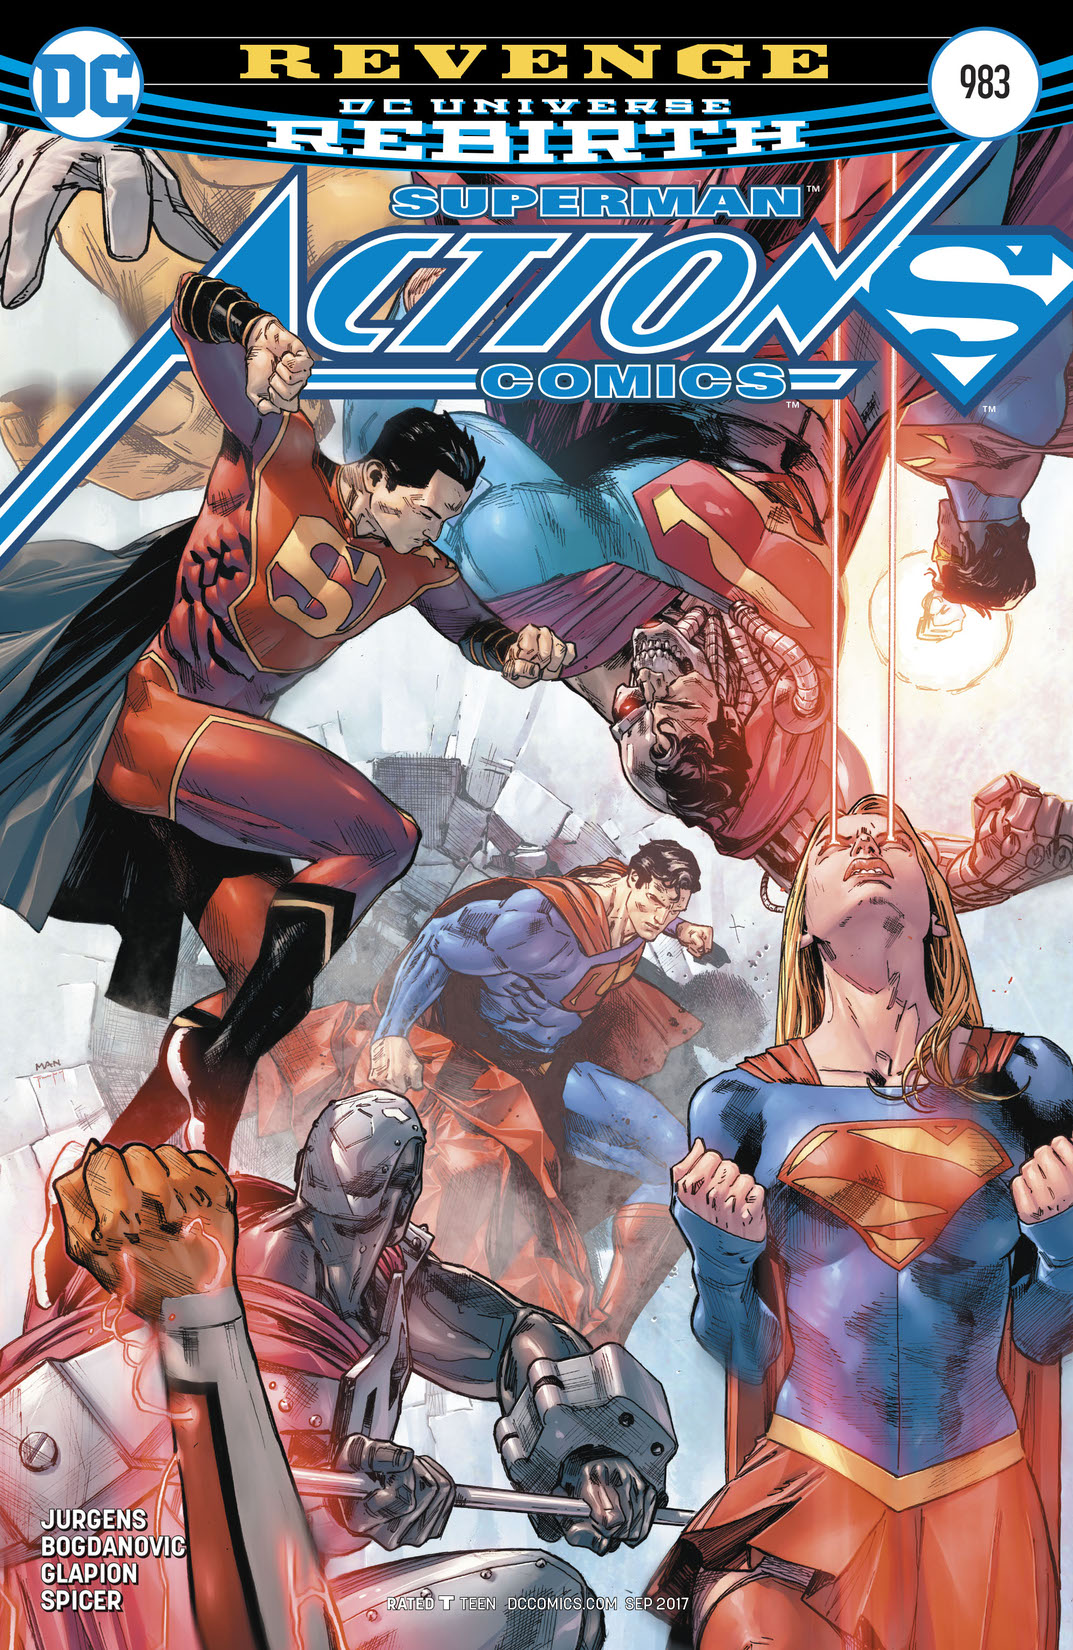 Action Comics (2016-) #983 preview images